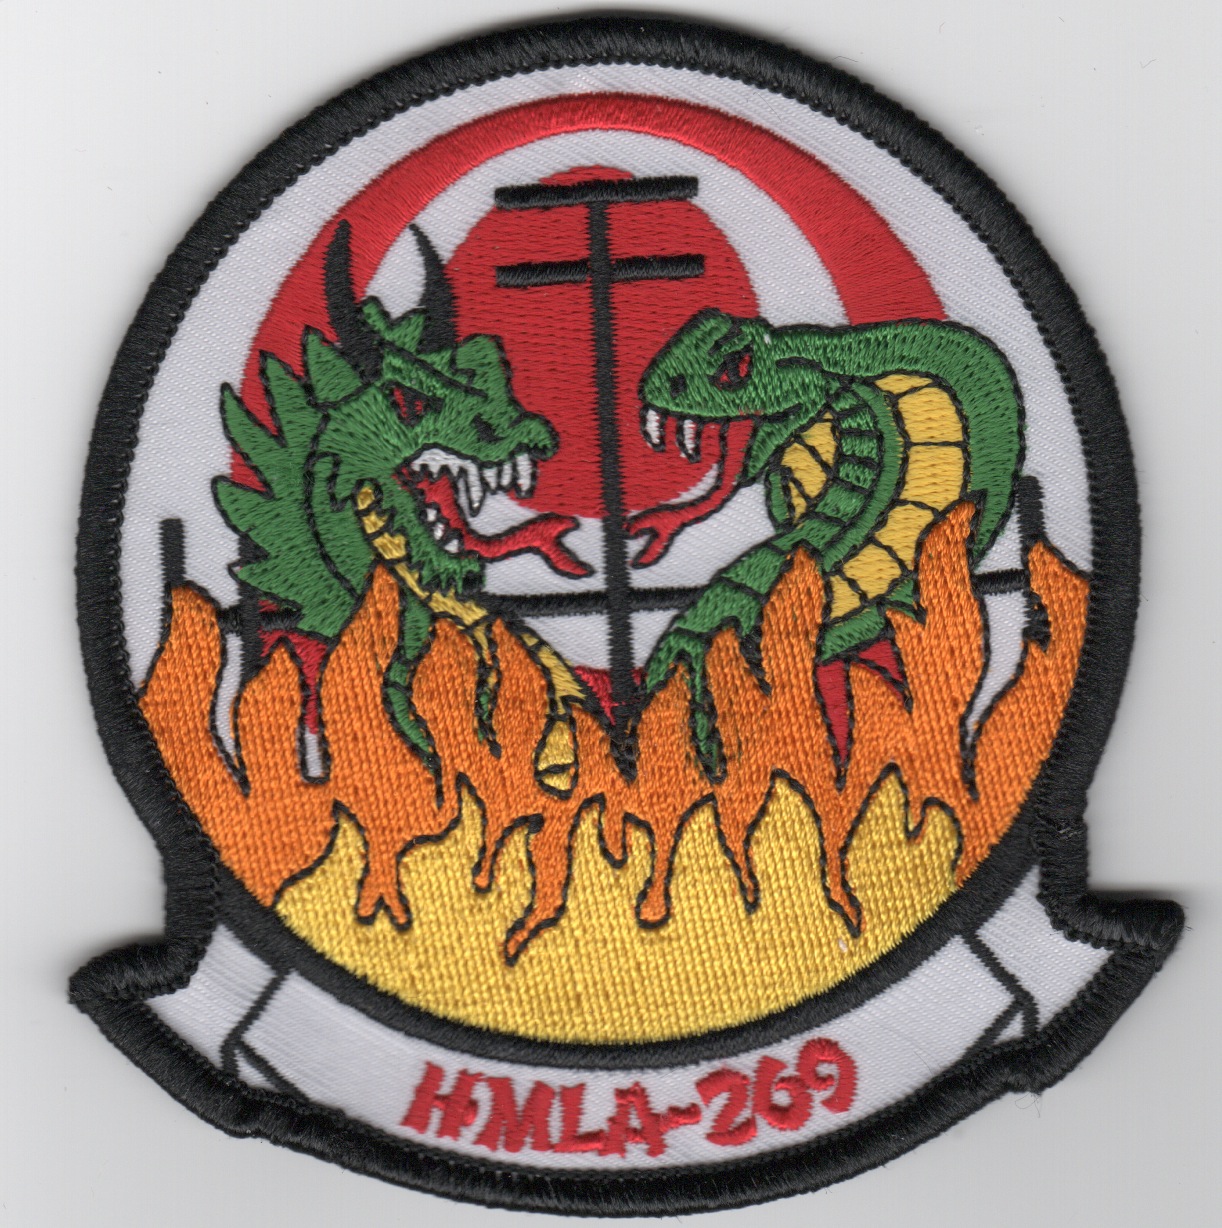 HMLA-269 Squadron Patch (2 Dragons/White)